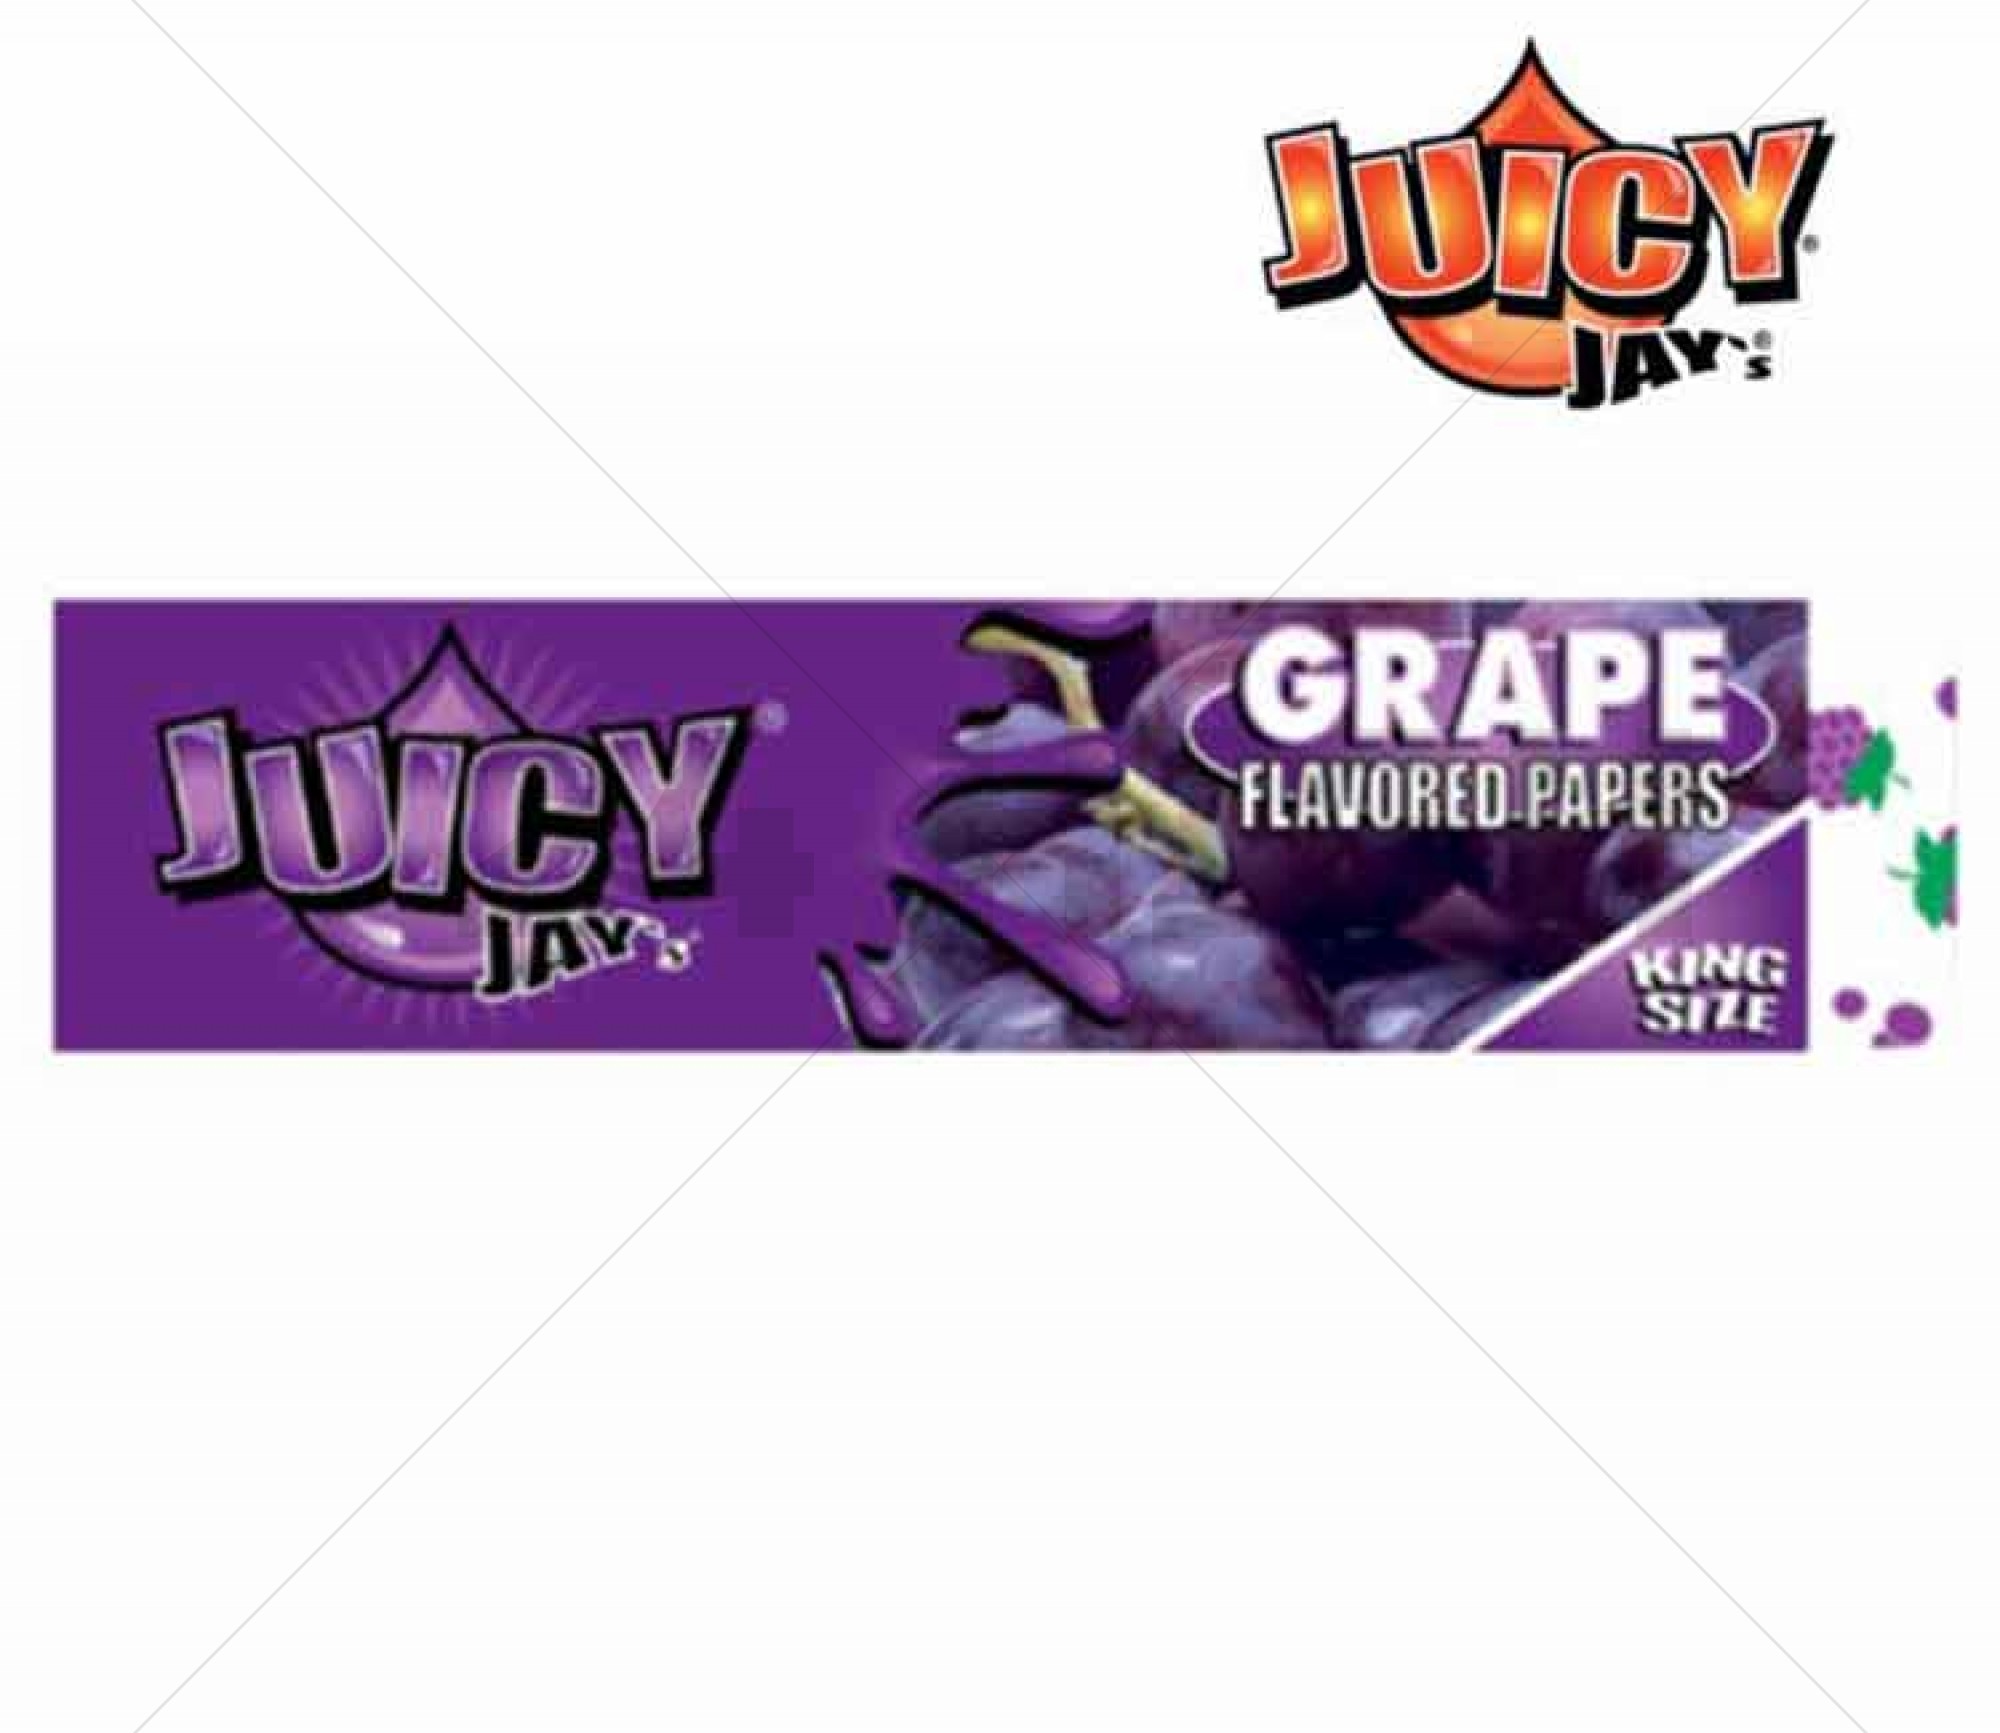 Juicy Jay kingsize Grape